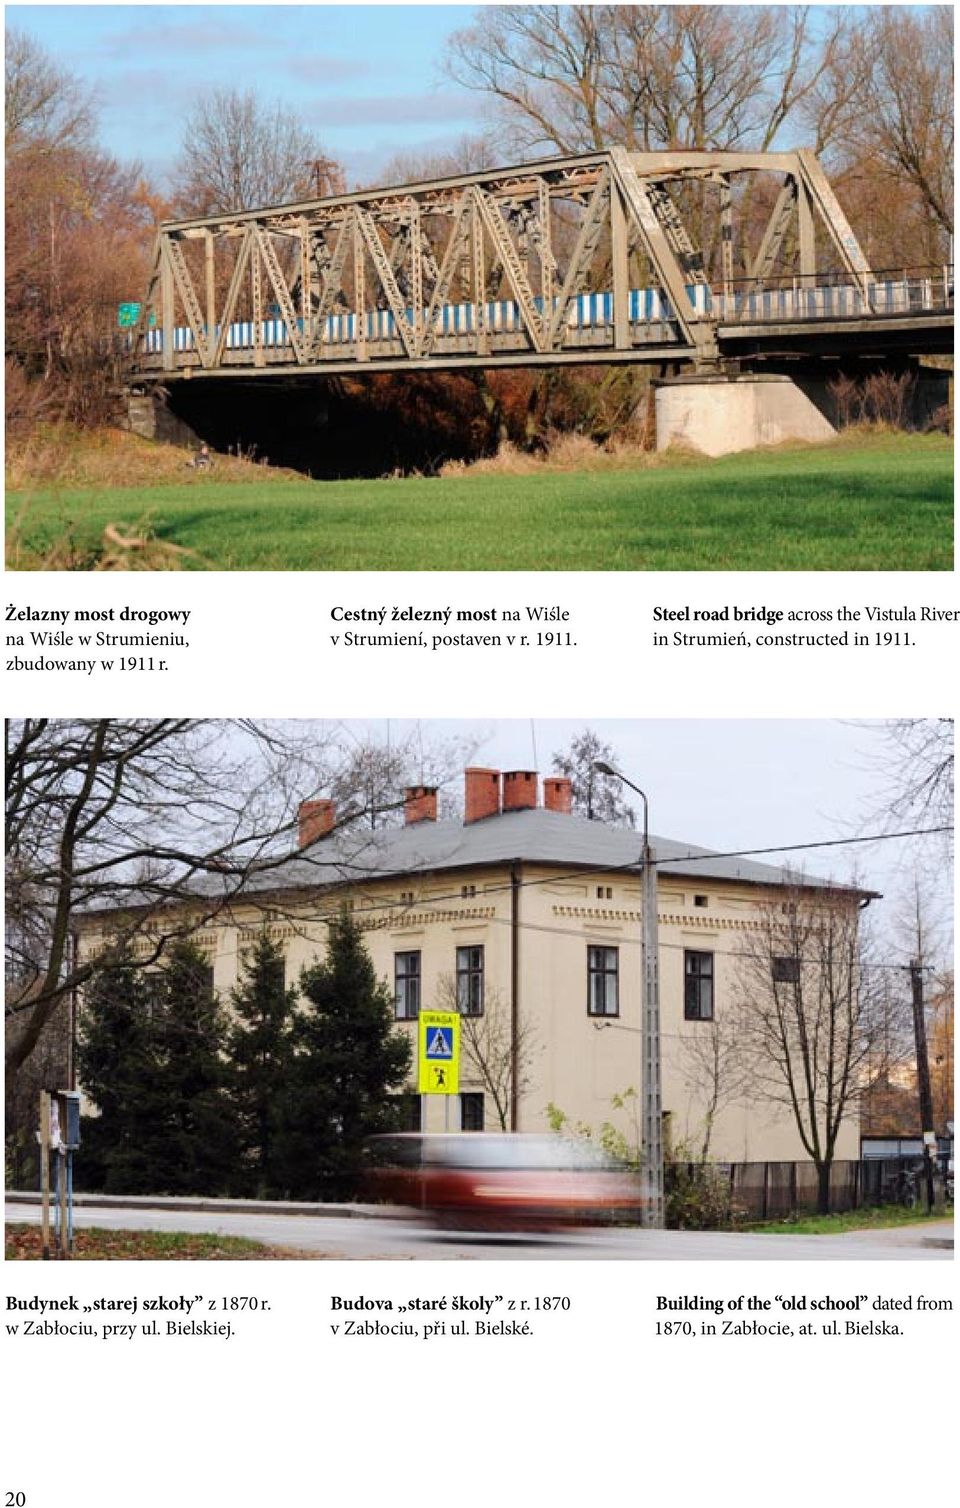 Steel road bridge across the Vistula River in Strumień, constructed in 1911.